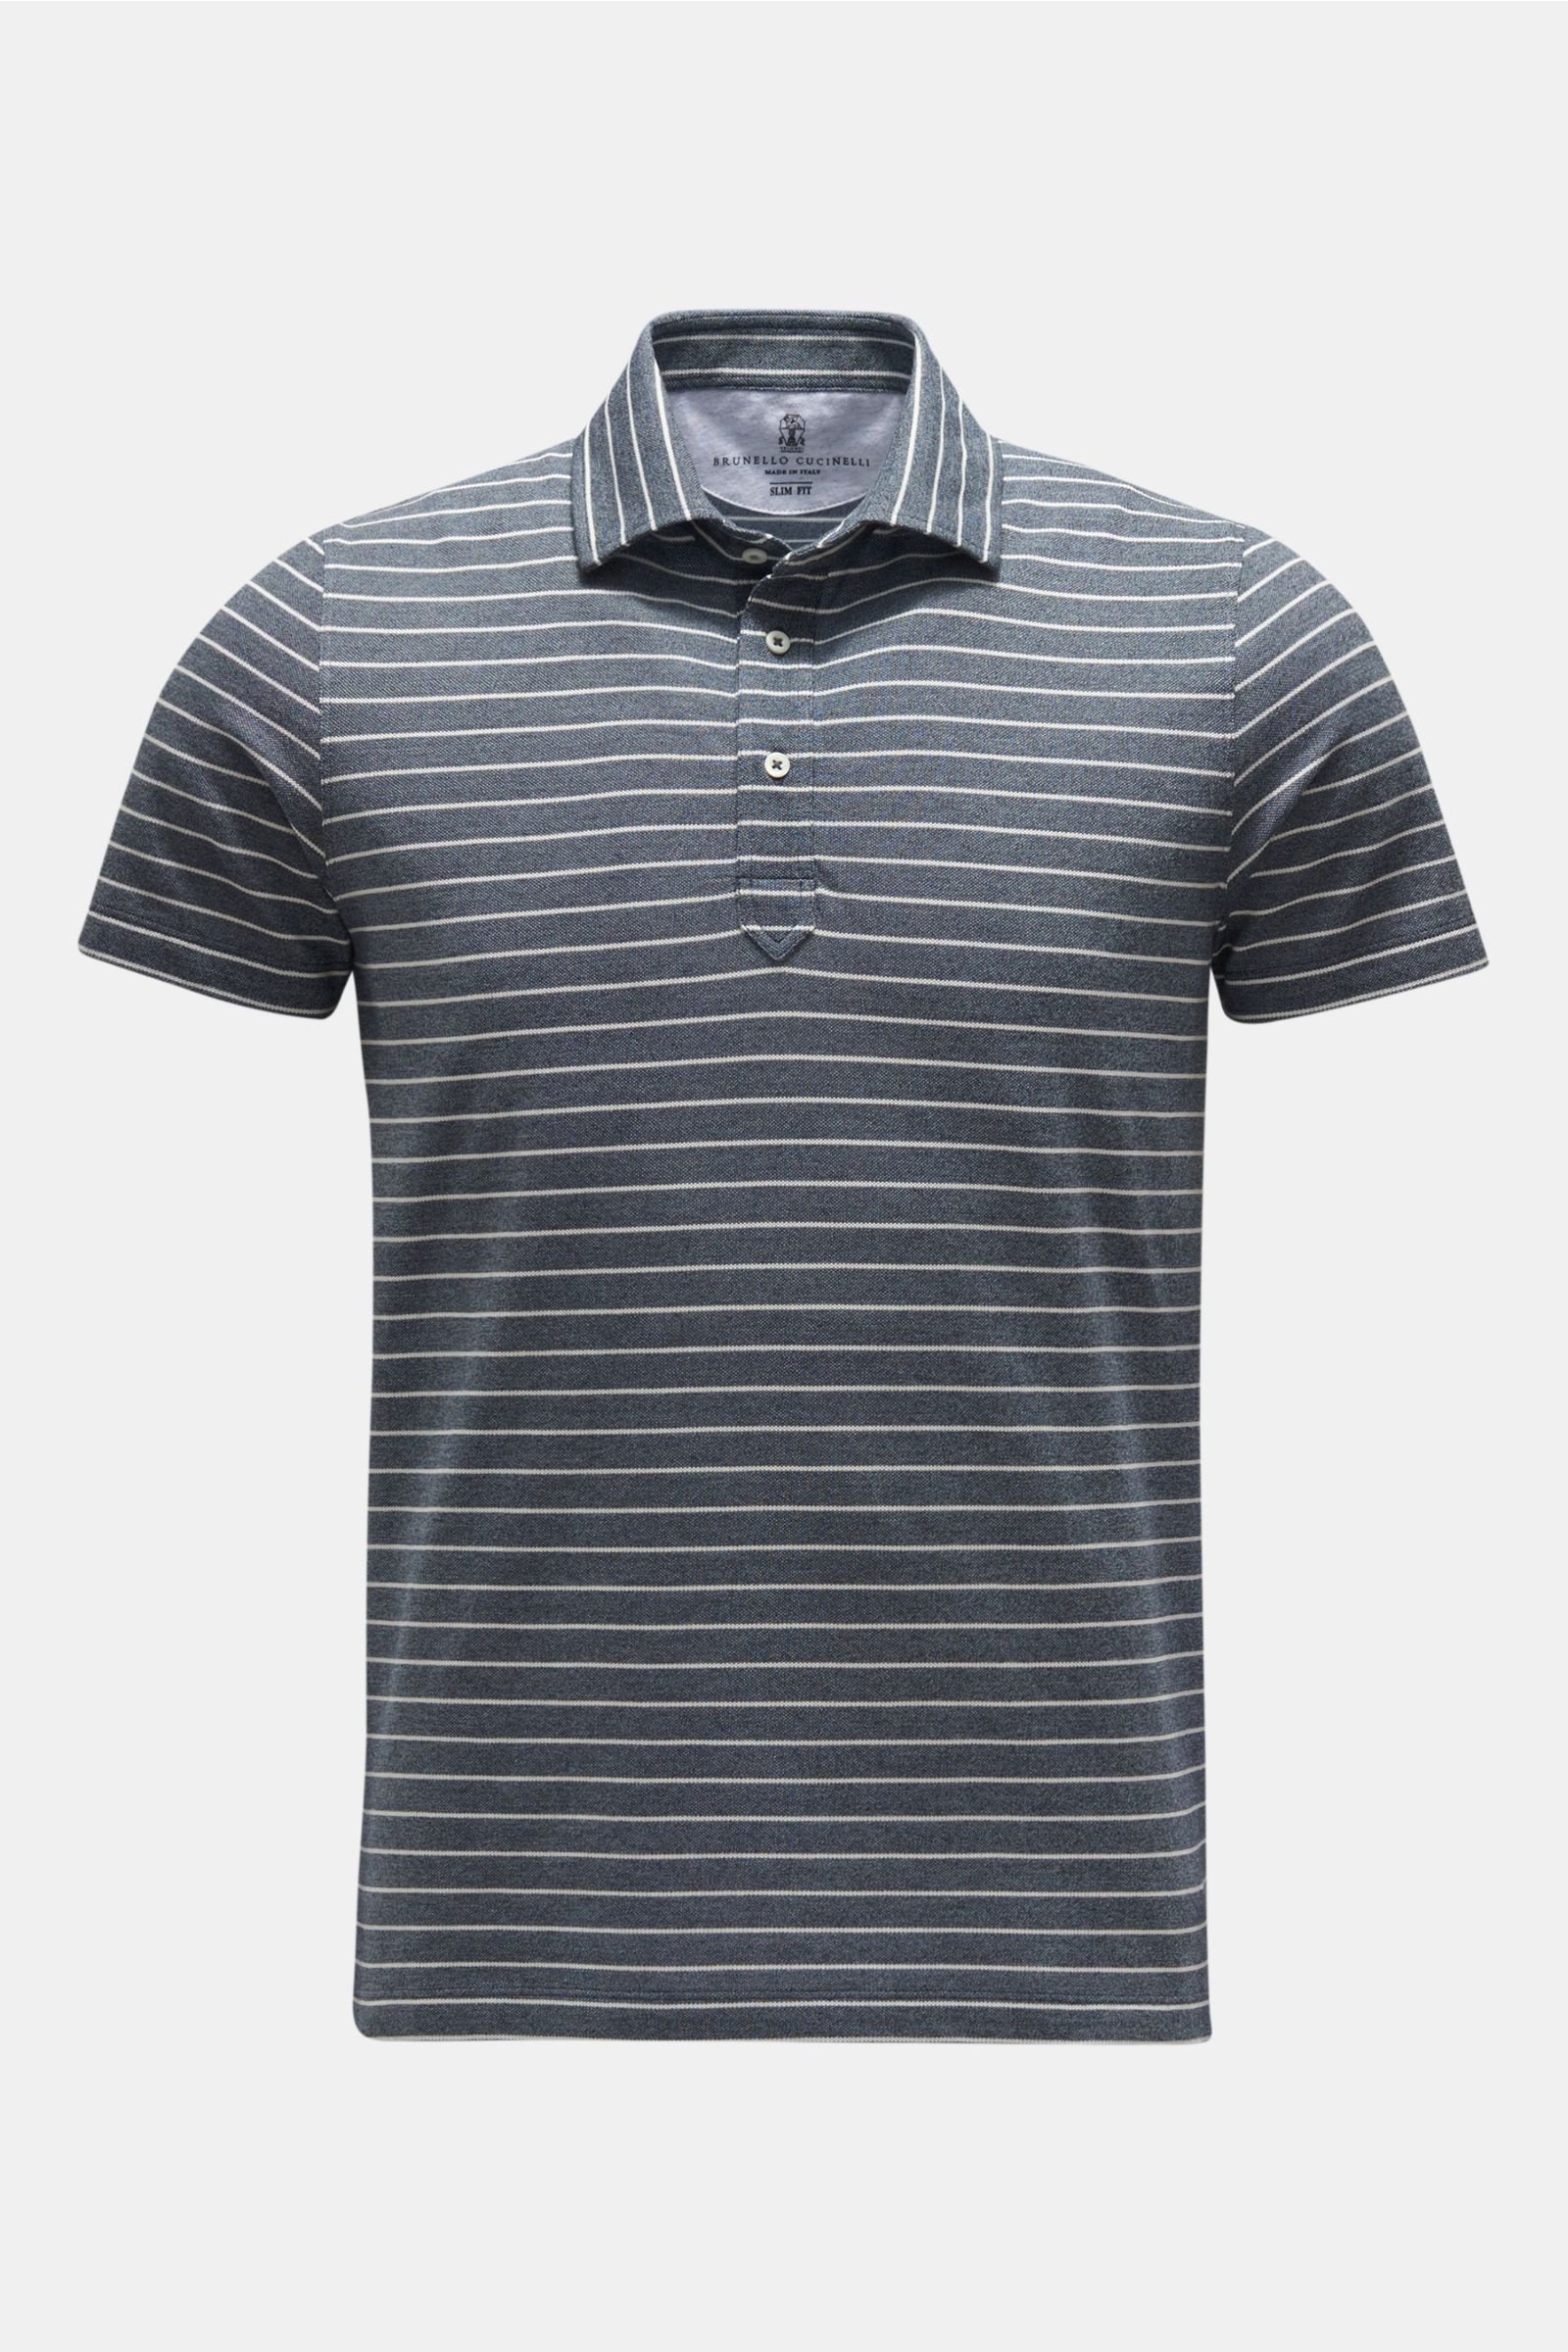 Polo shirt grey-blue/white striped